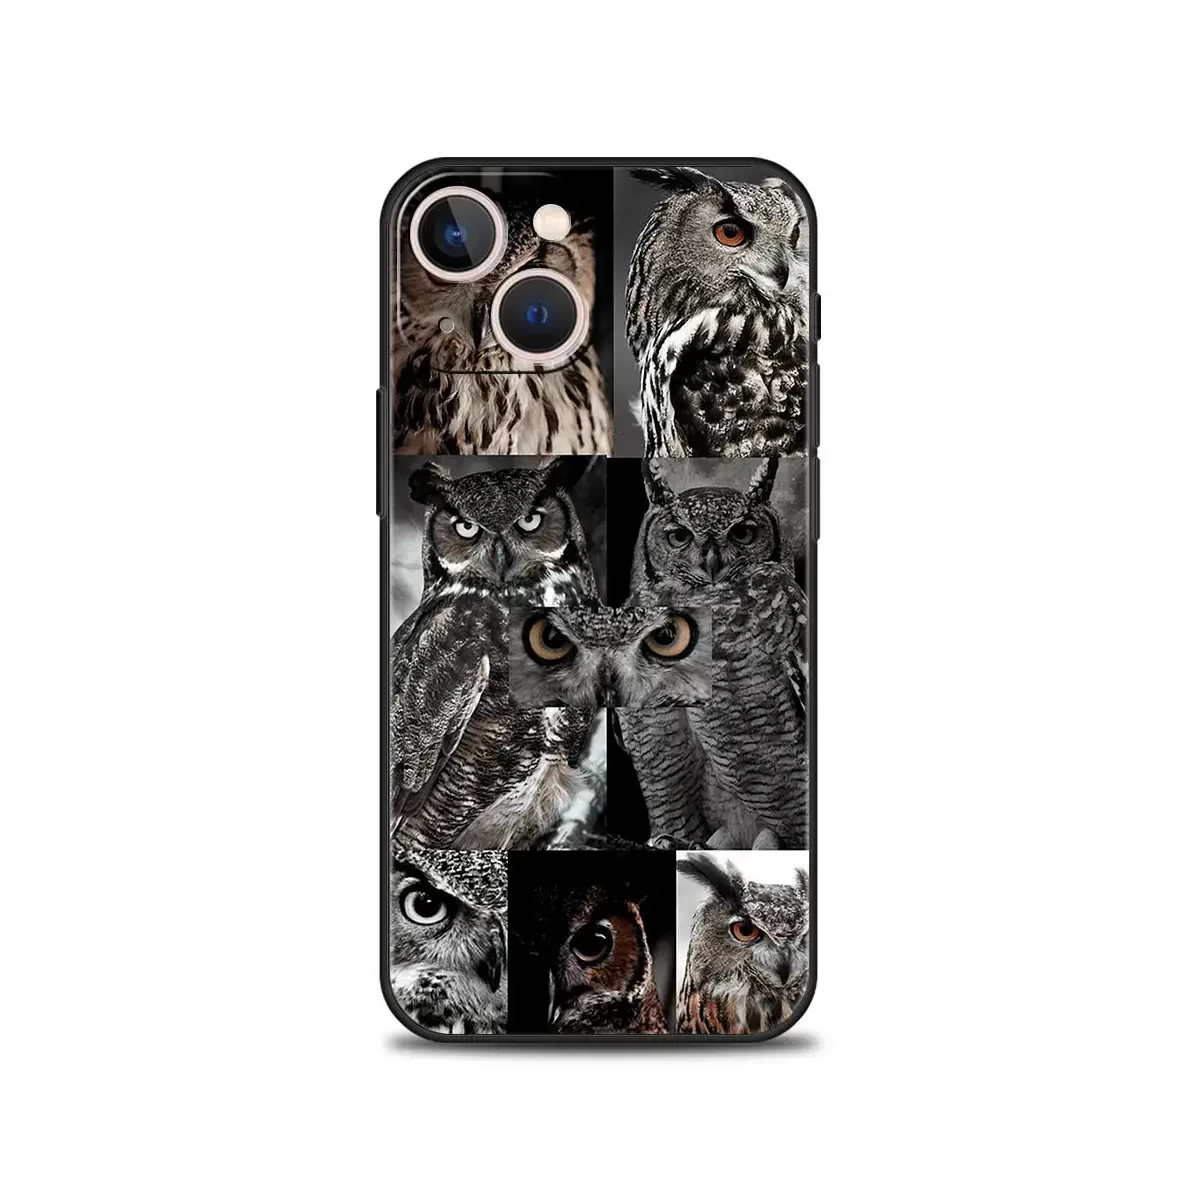 Mosaic Art Owl Phone Case (iPhone)